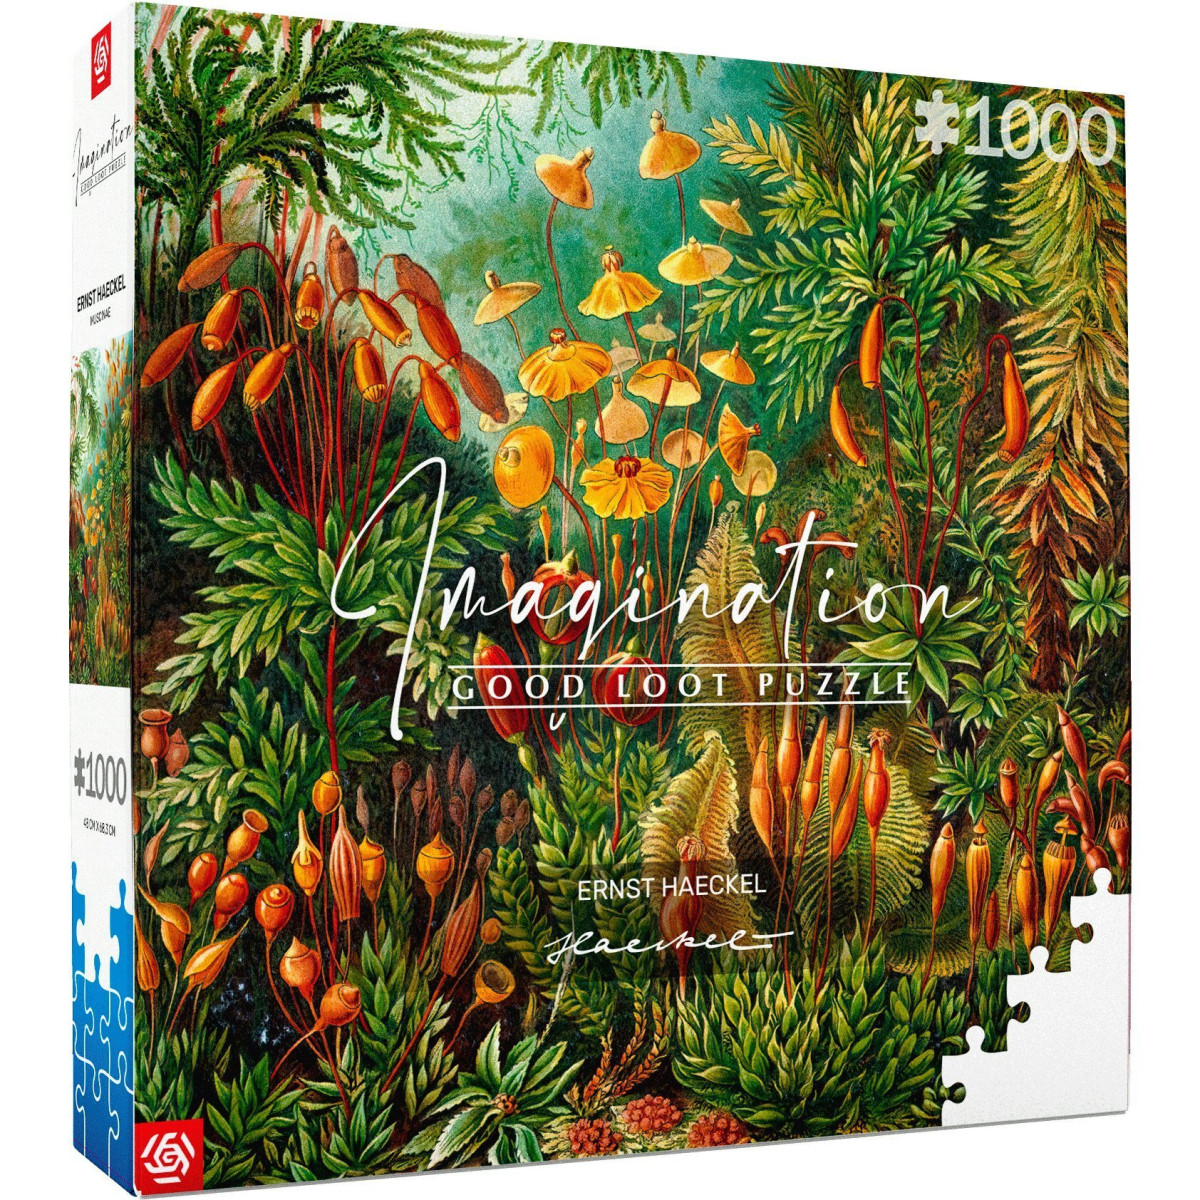 Пазлы Изображение: Ernst Haeckel Muscinae Puzzles 1000 эл.